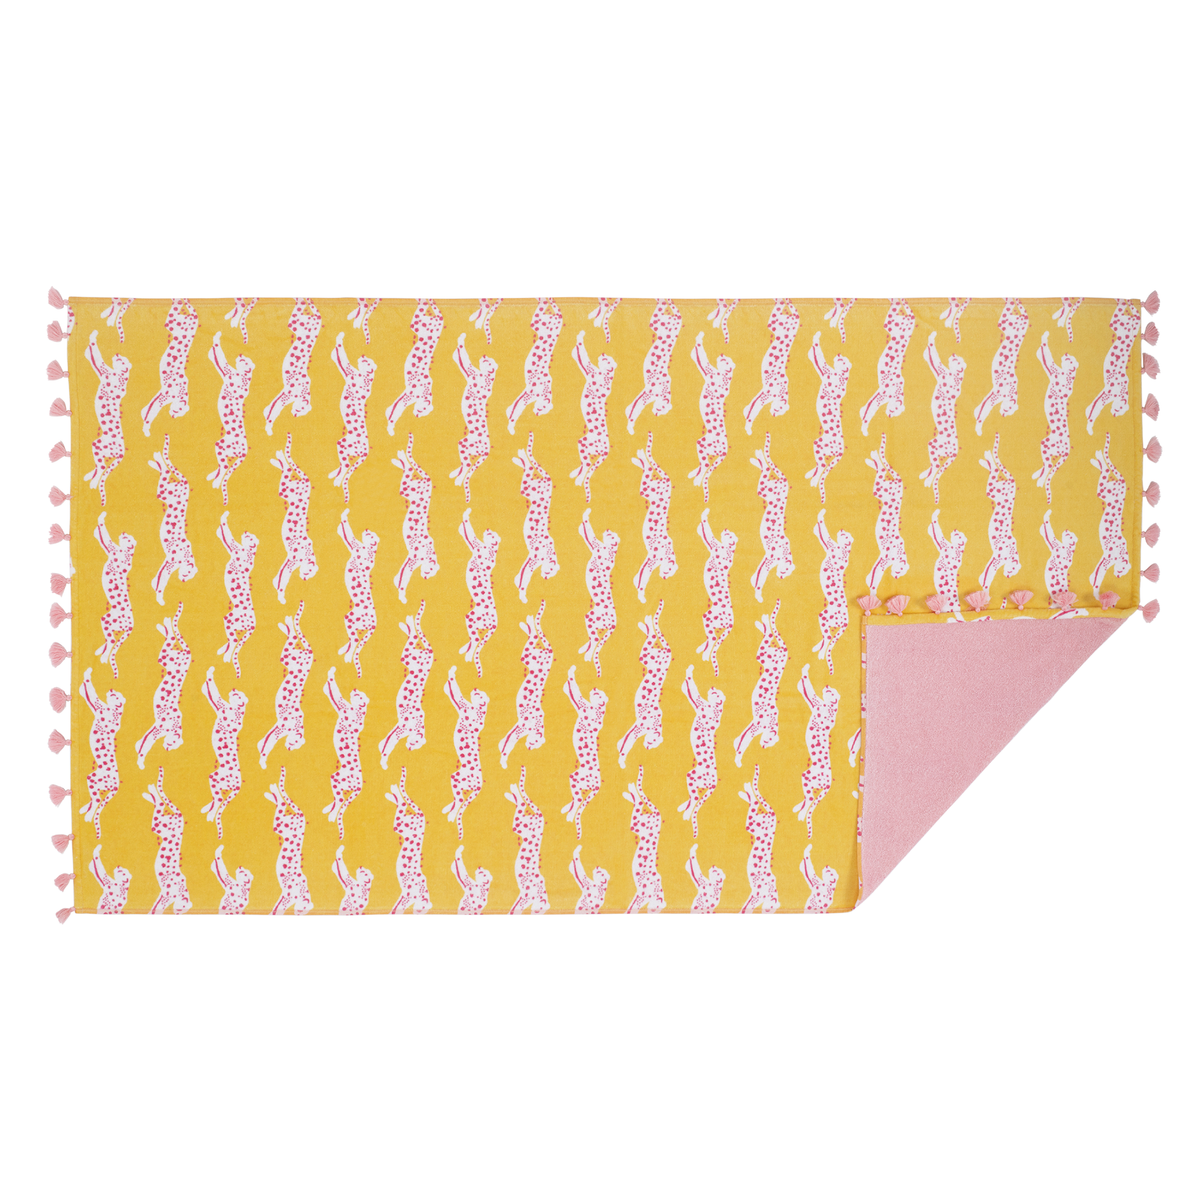 Flat Silo of Matouk Leaping Leopard Beach Towels in Color Lemonade